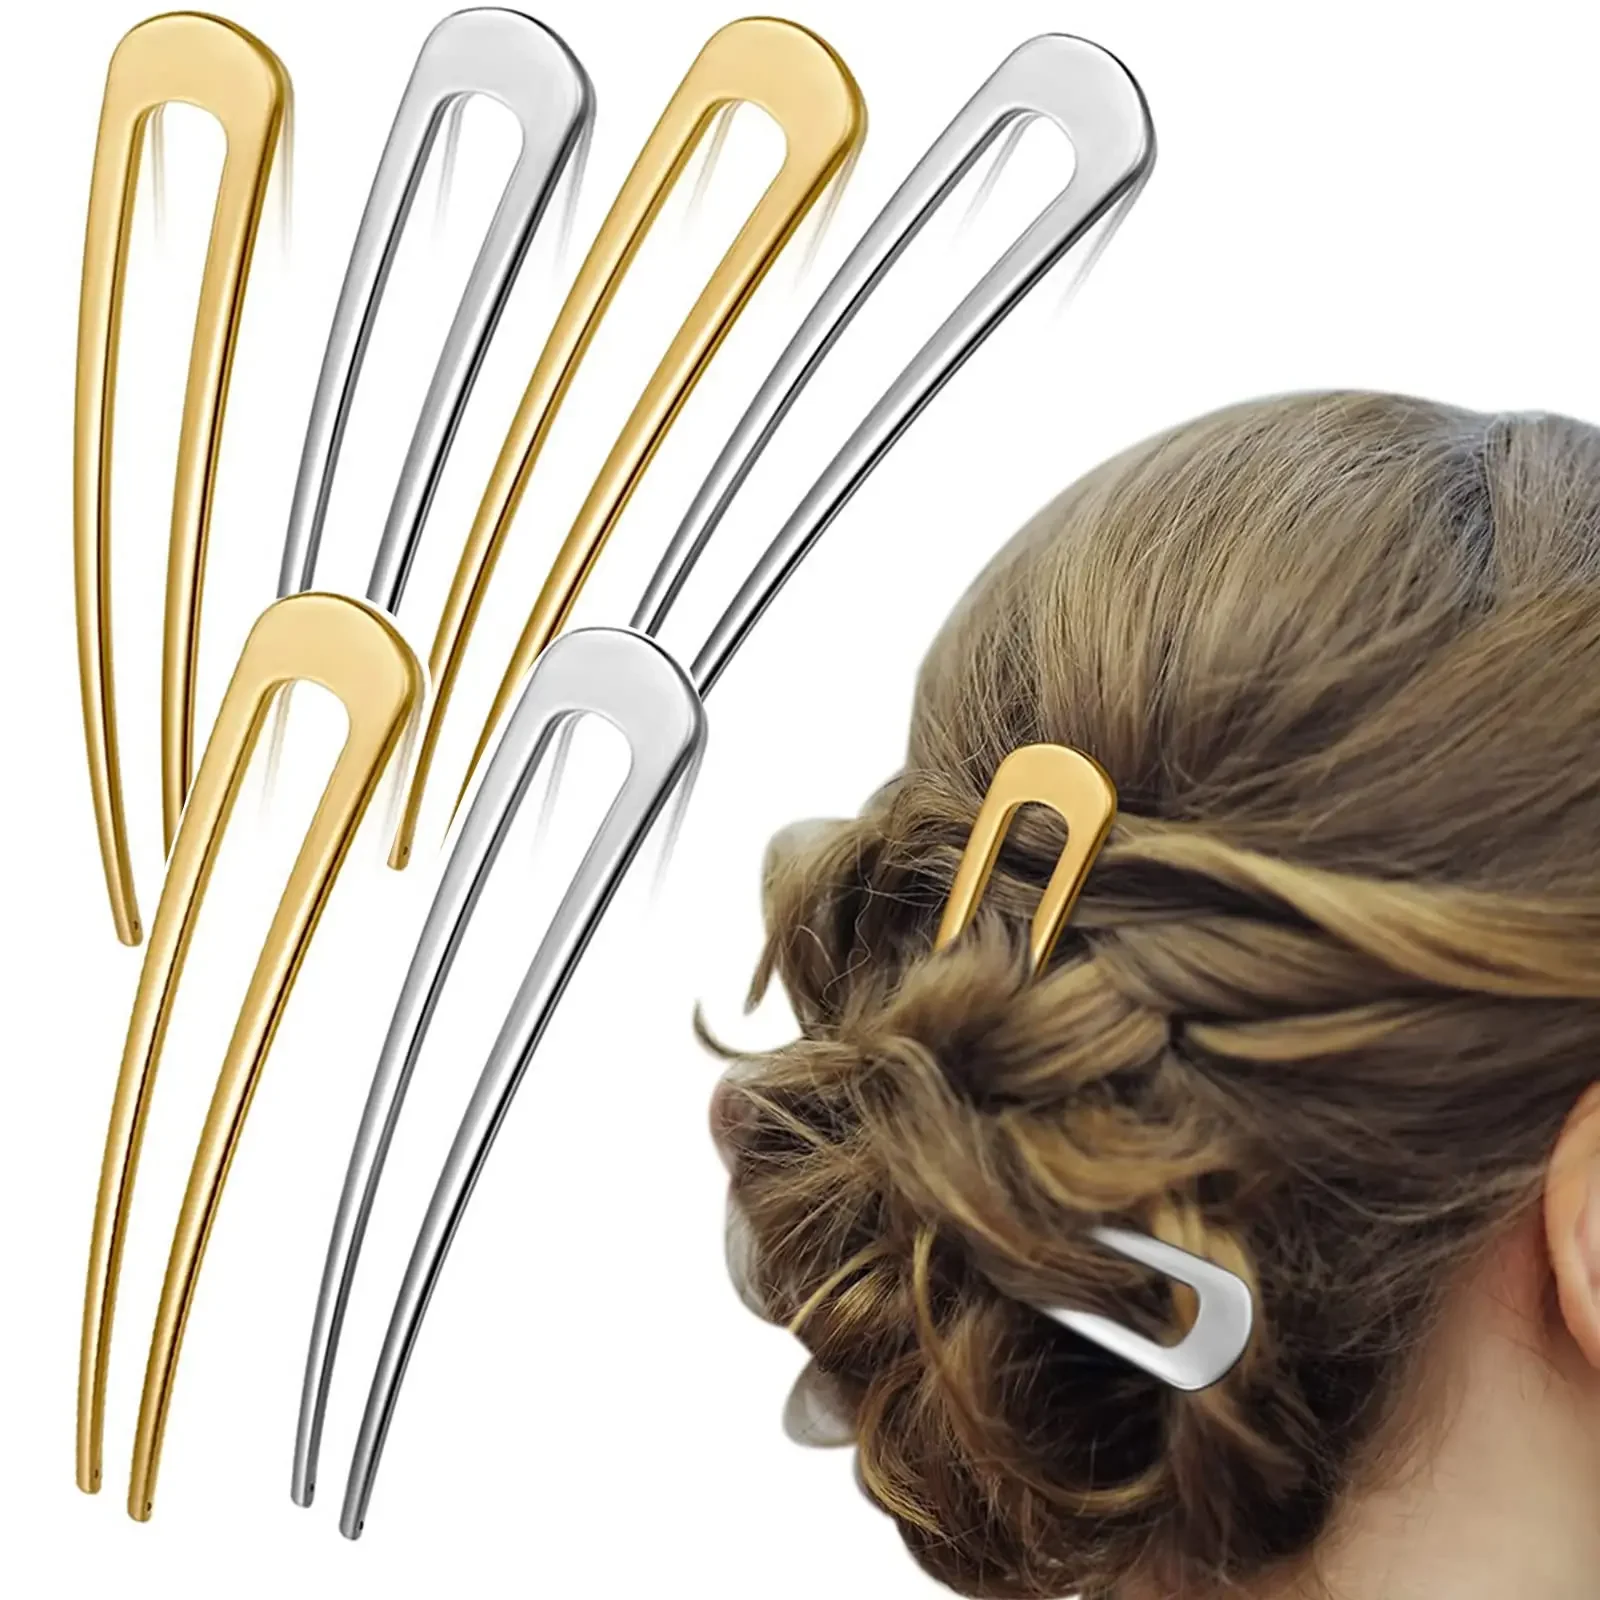 

Metal U Shaped Hair Pins French Hairpin Vintage Forks Sticks Bobby Pin Kit for Updo Bun Women Girls Hairstyle Hair Accessories